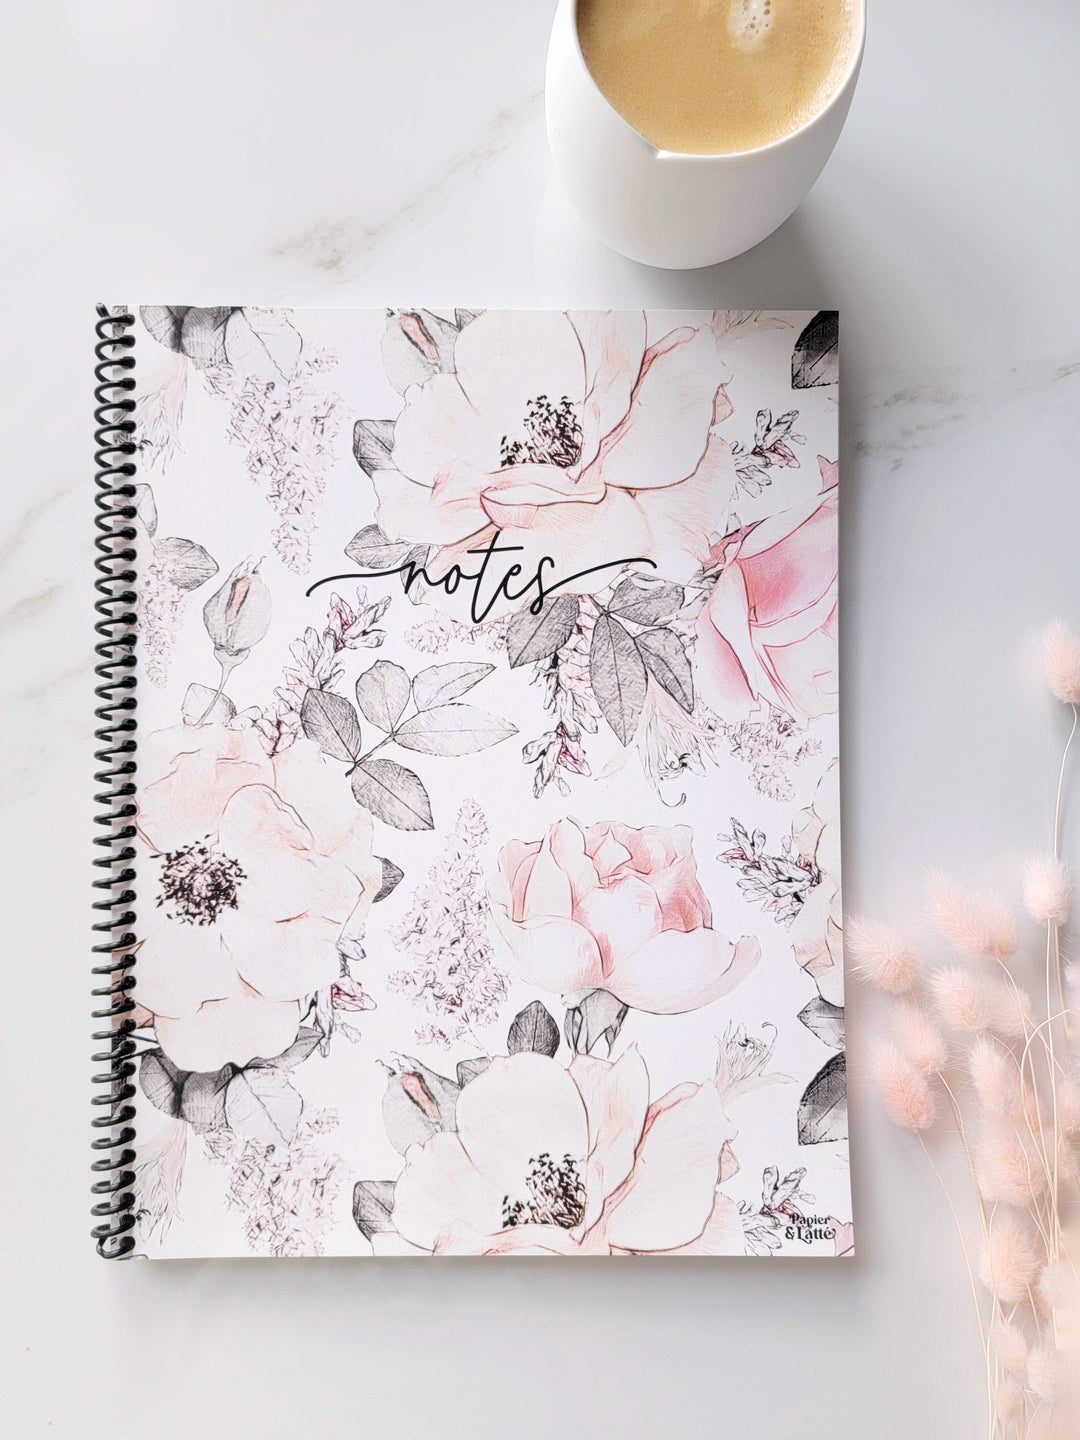 Mimi - Cahier de notes / Notebook